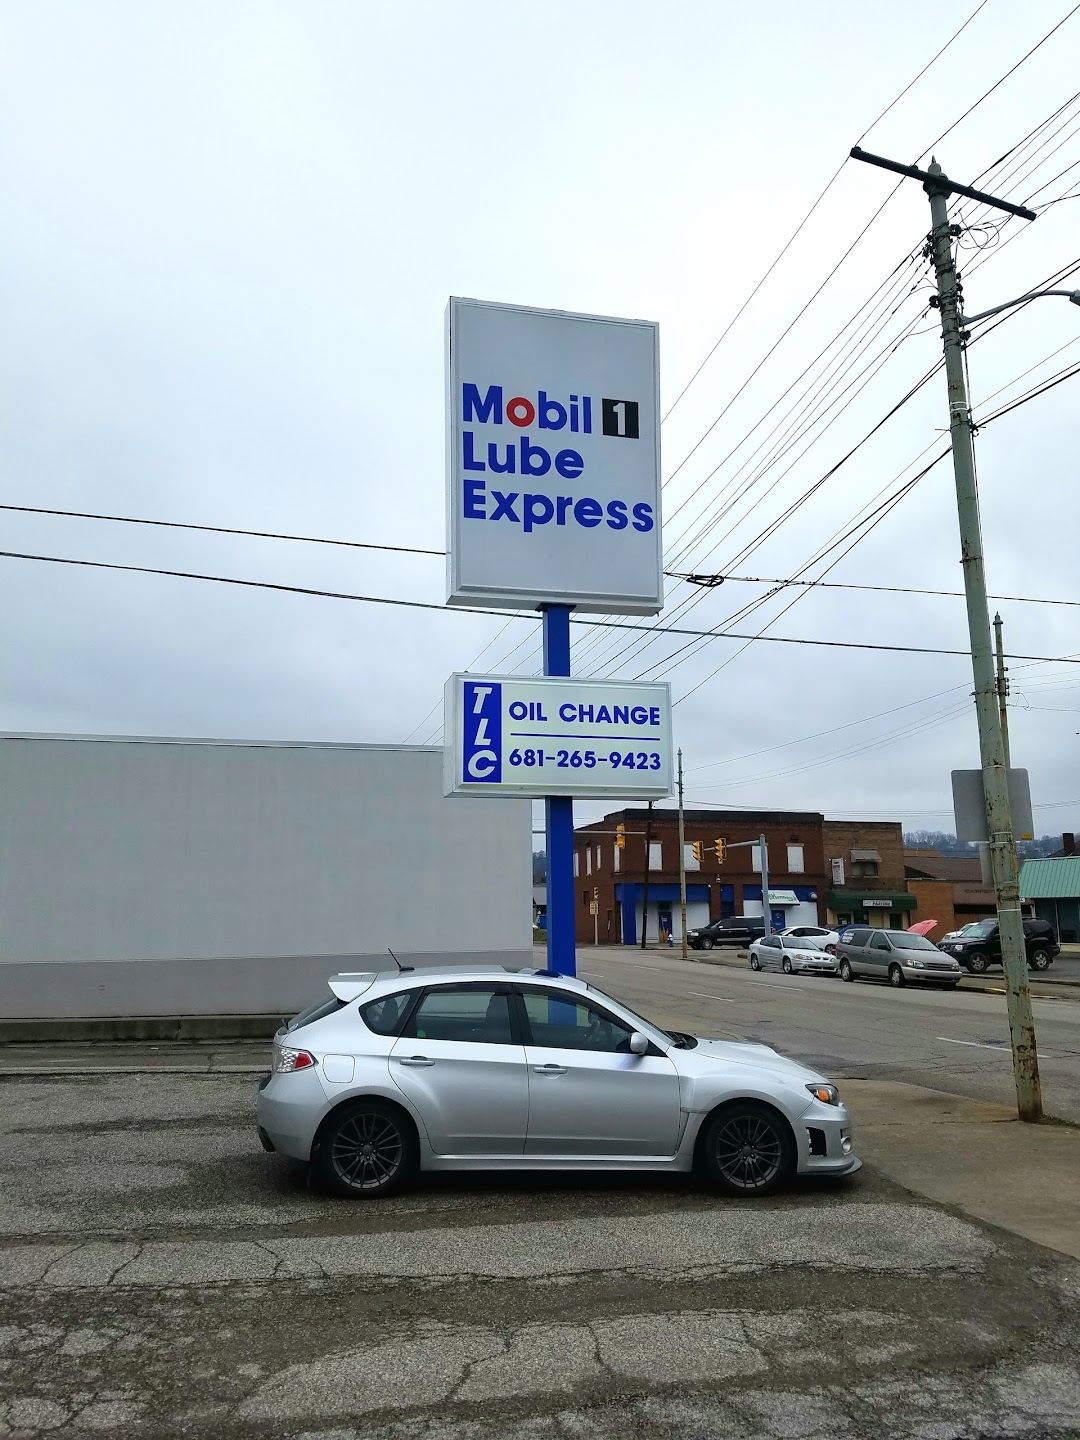 TLC Mobil 1 Lube Express